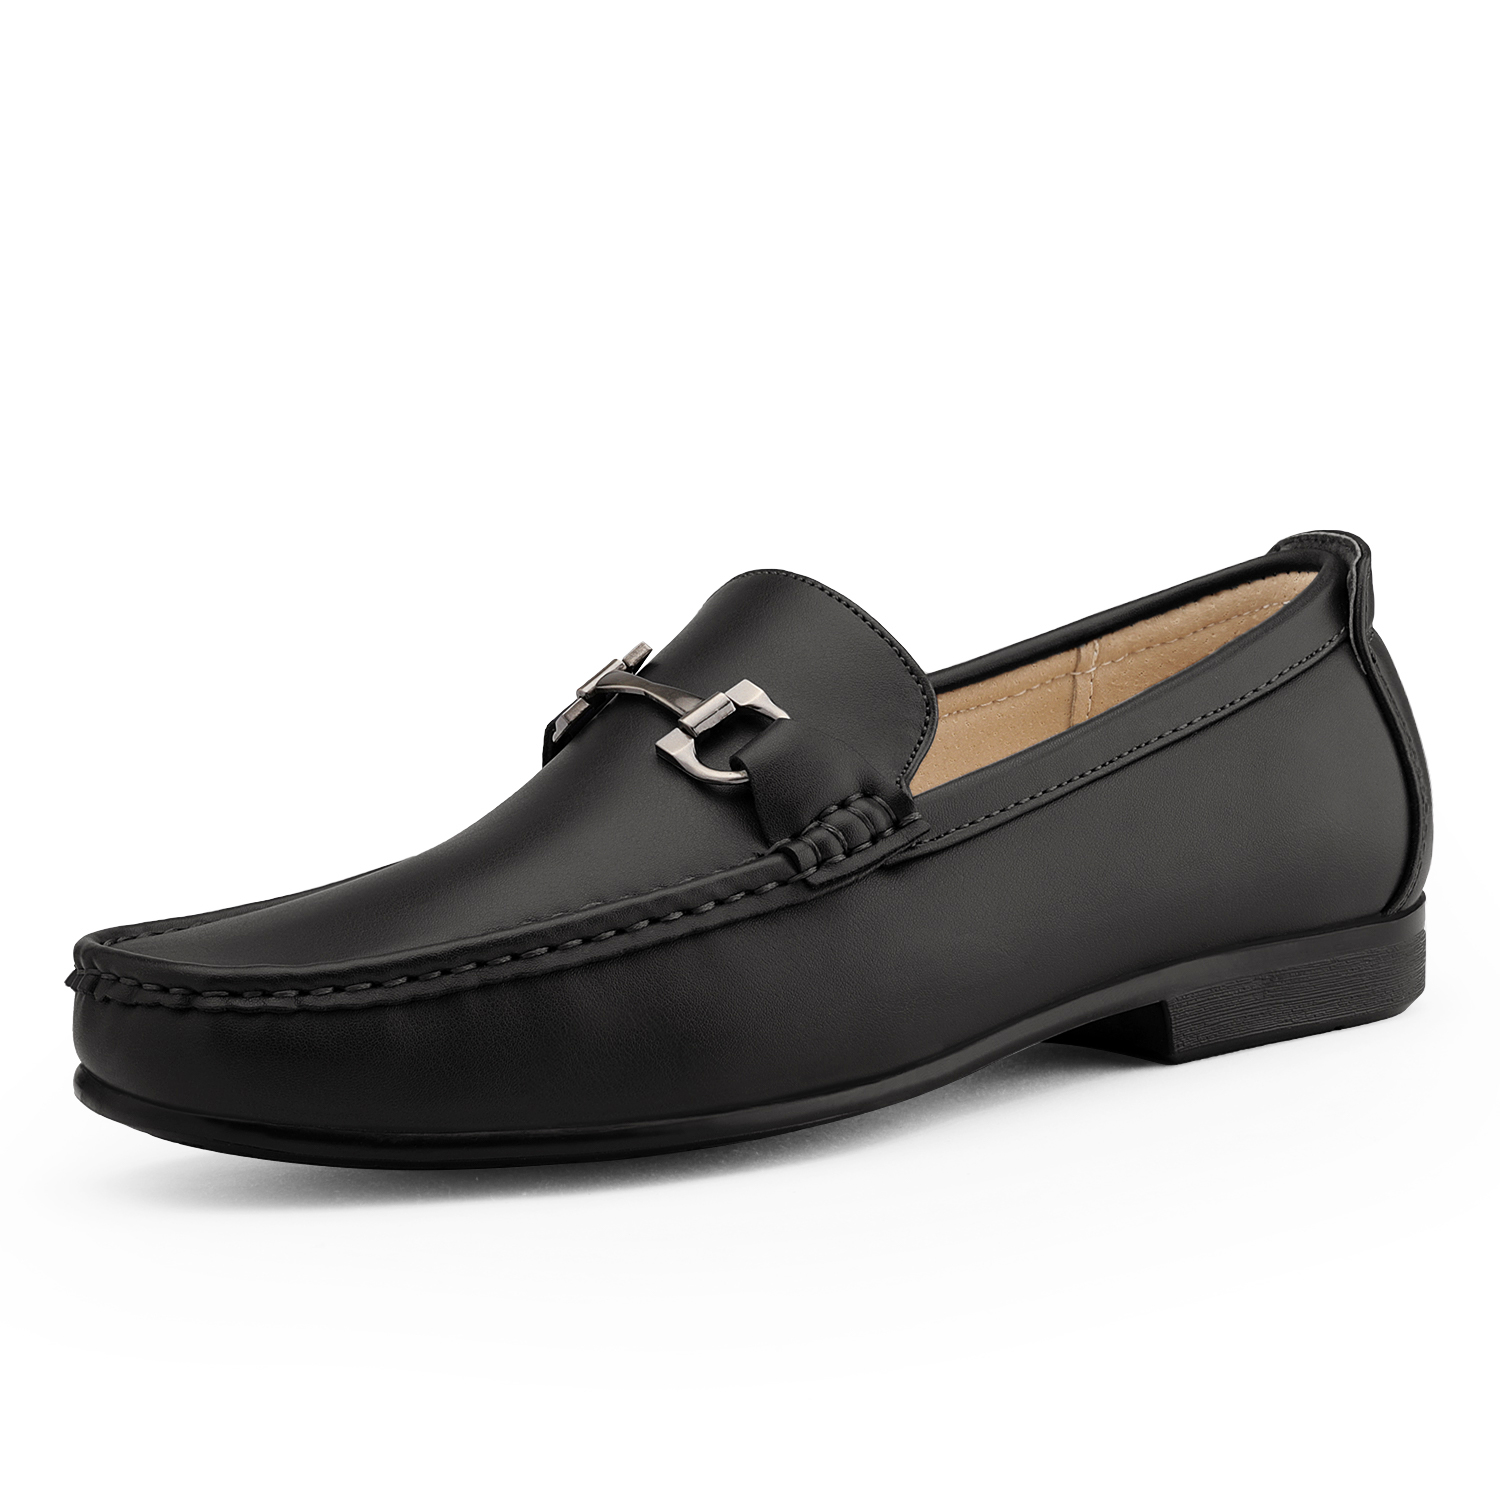 Bruno Marc Men's Moccasin Loafer Shoes Men Dress Loafers Slip On Casual Penny Comfort Outdoor Loafers HENRY-1 BLACK Size 9 - image 1 of 5